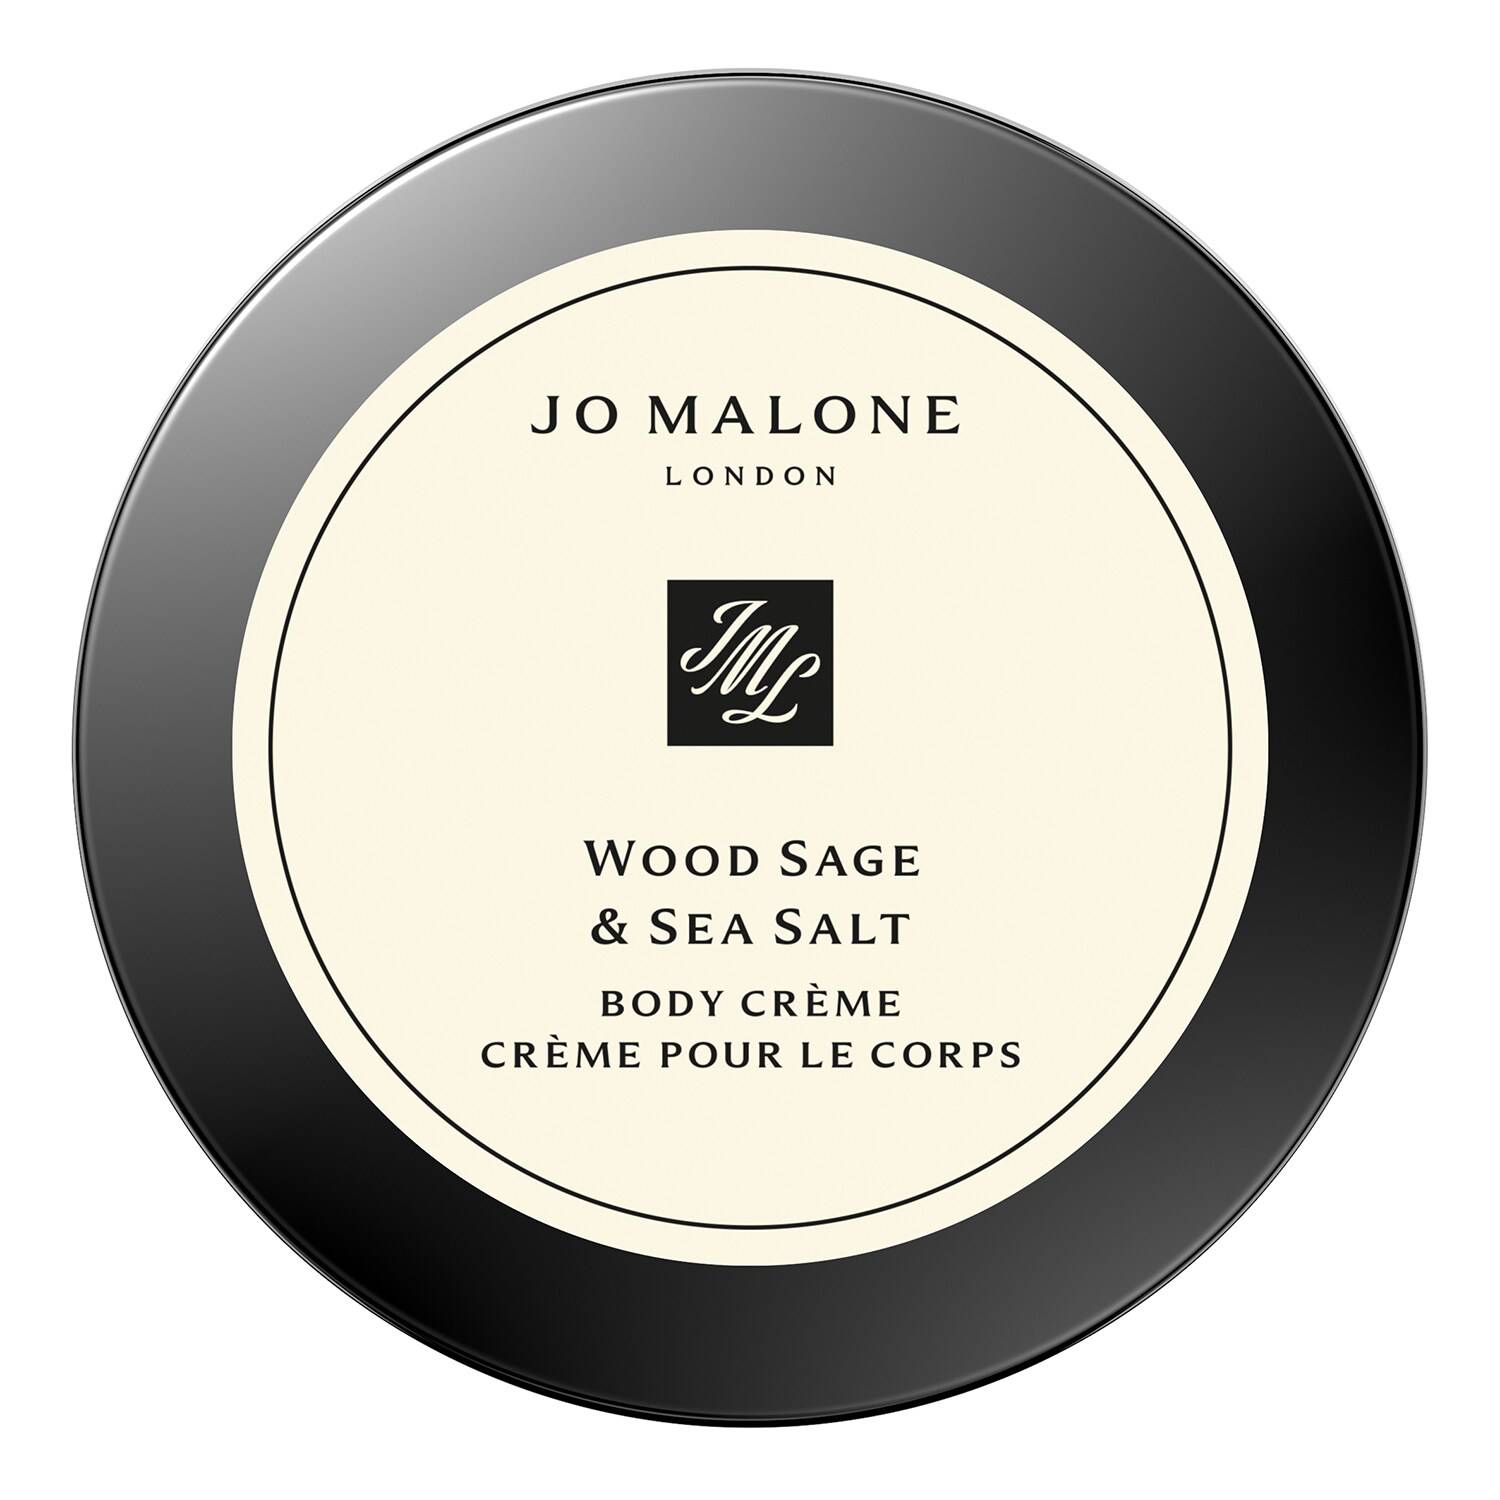 Jo Malone London Wood Sage & Sea Salt Body Creme 50Ml